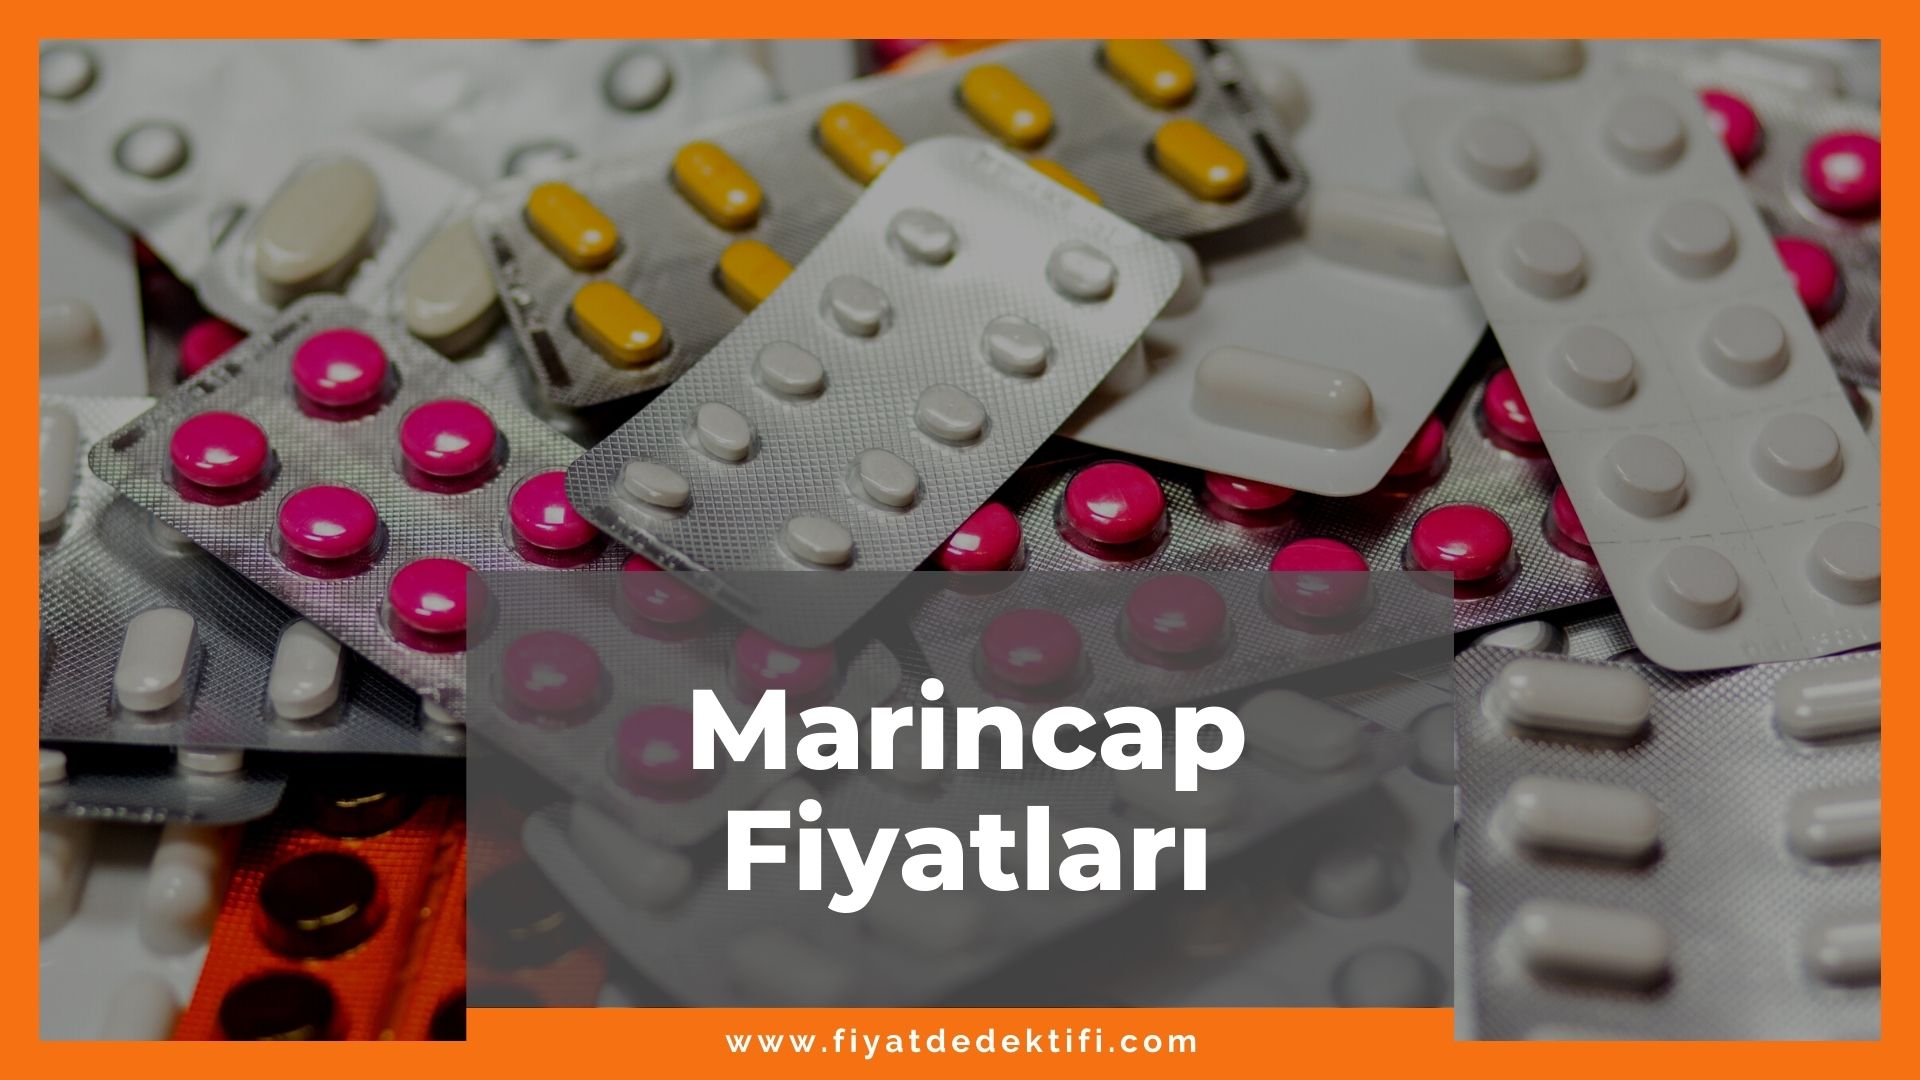 Marincap Fiyat 2021, Marincap Omega 3 - 500 mg Fiyatı, marincap zamlandı mı, marincap zamlı fiyatı ne kadar kaç tl oldu